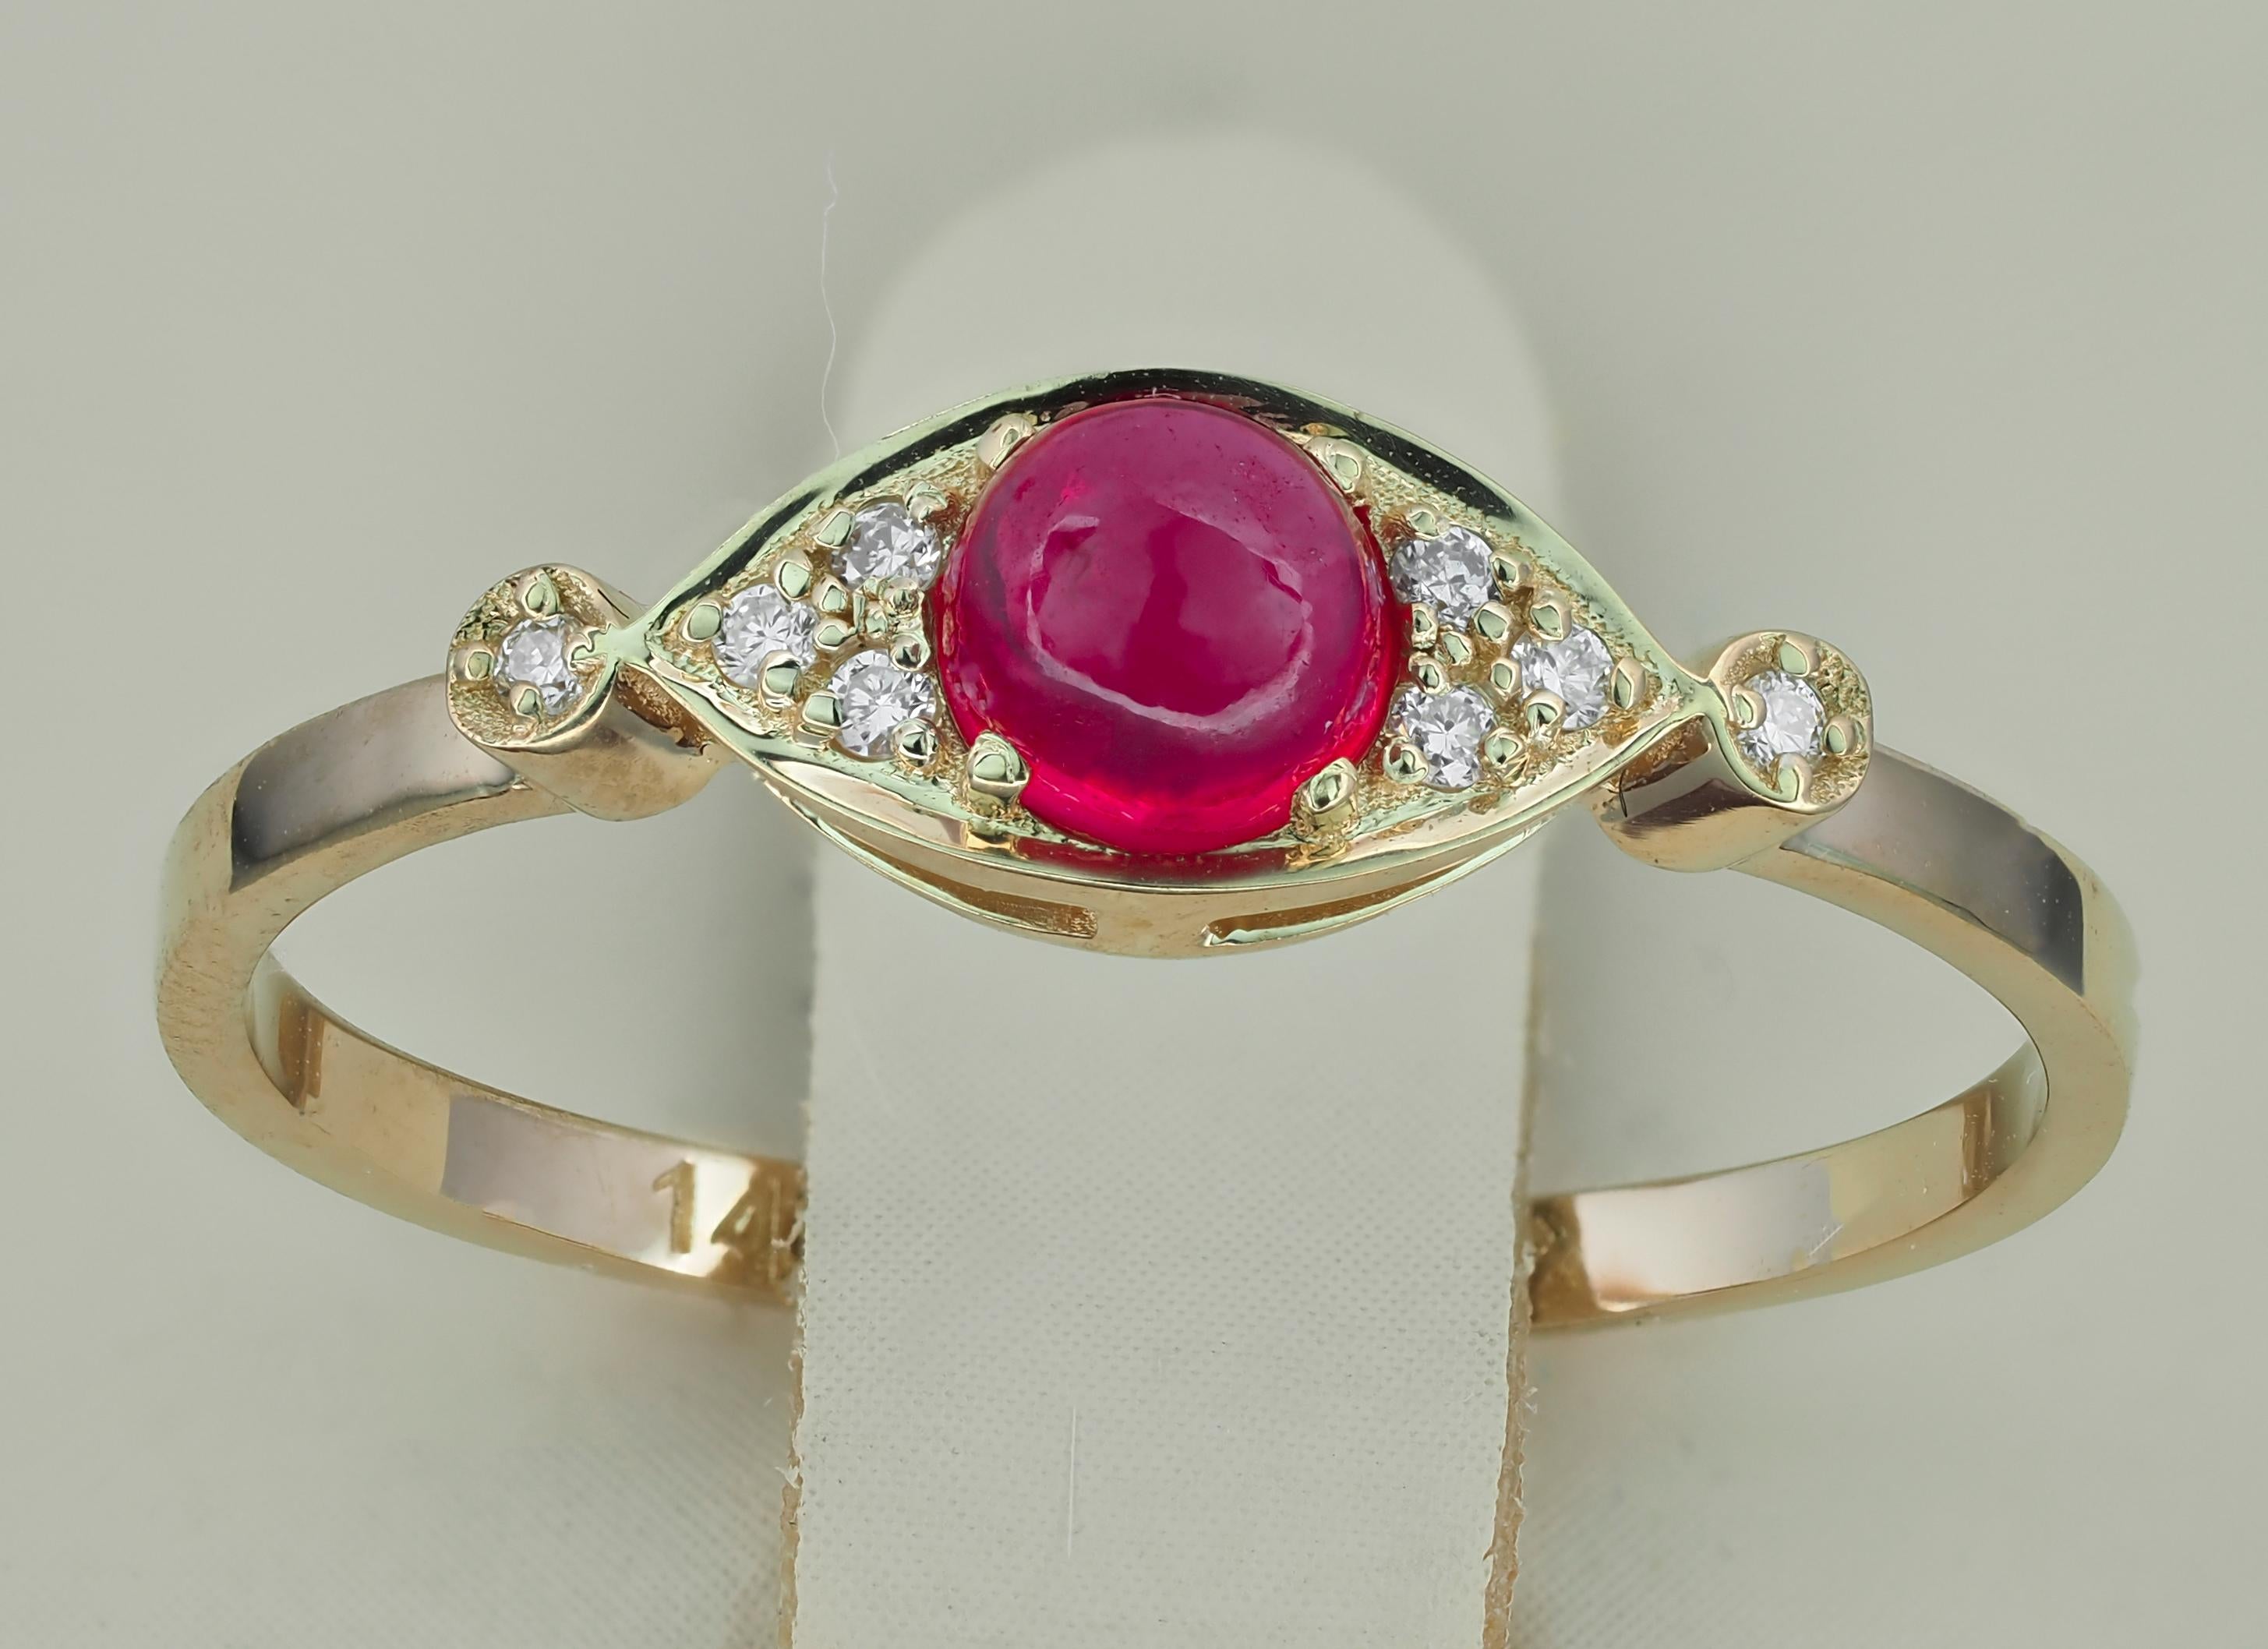 For Sale:  Ruby 14 karat ring.  Evil Eye Ring. July birthstone ruby ring 3